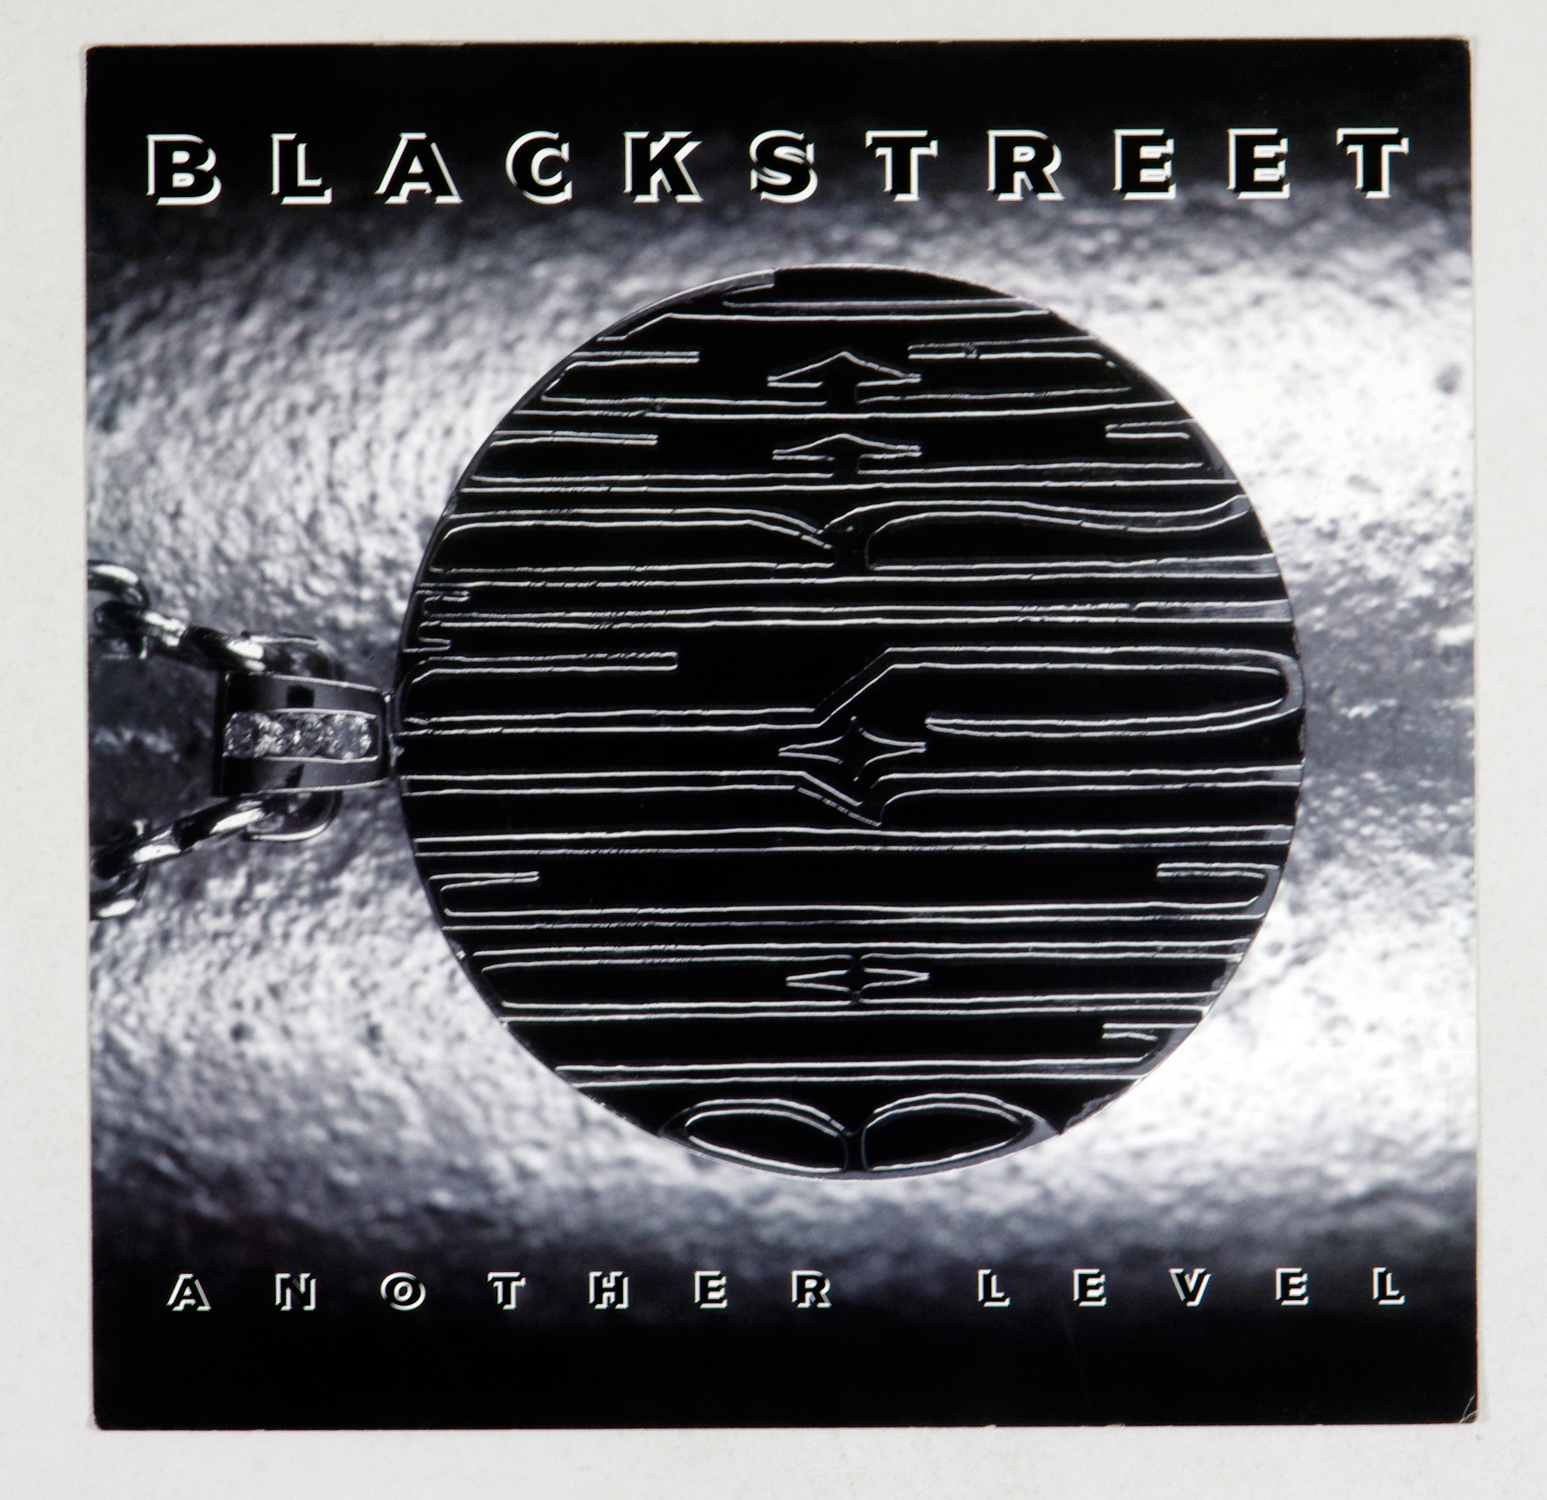 Blackstreet Poster Flat 1996 Another Level Album Promotion 12 x 12 